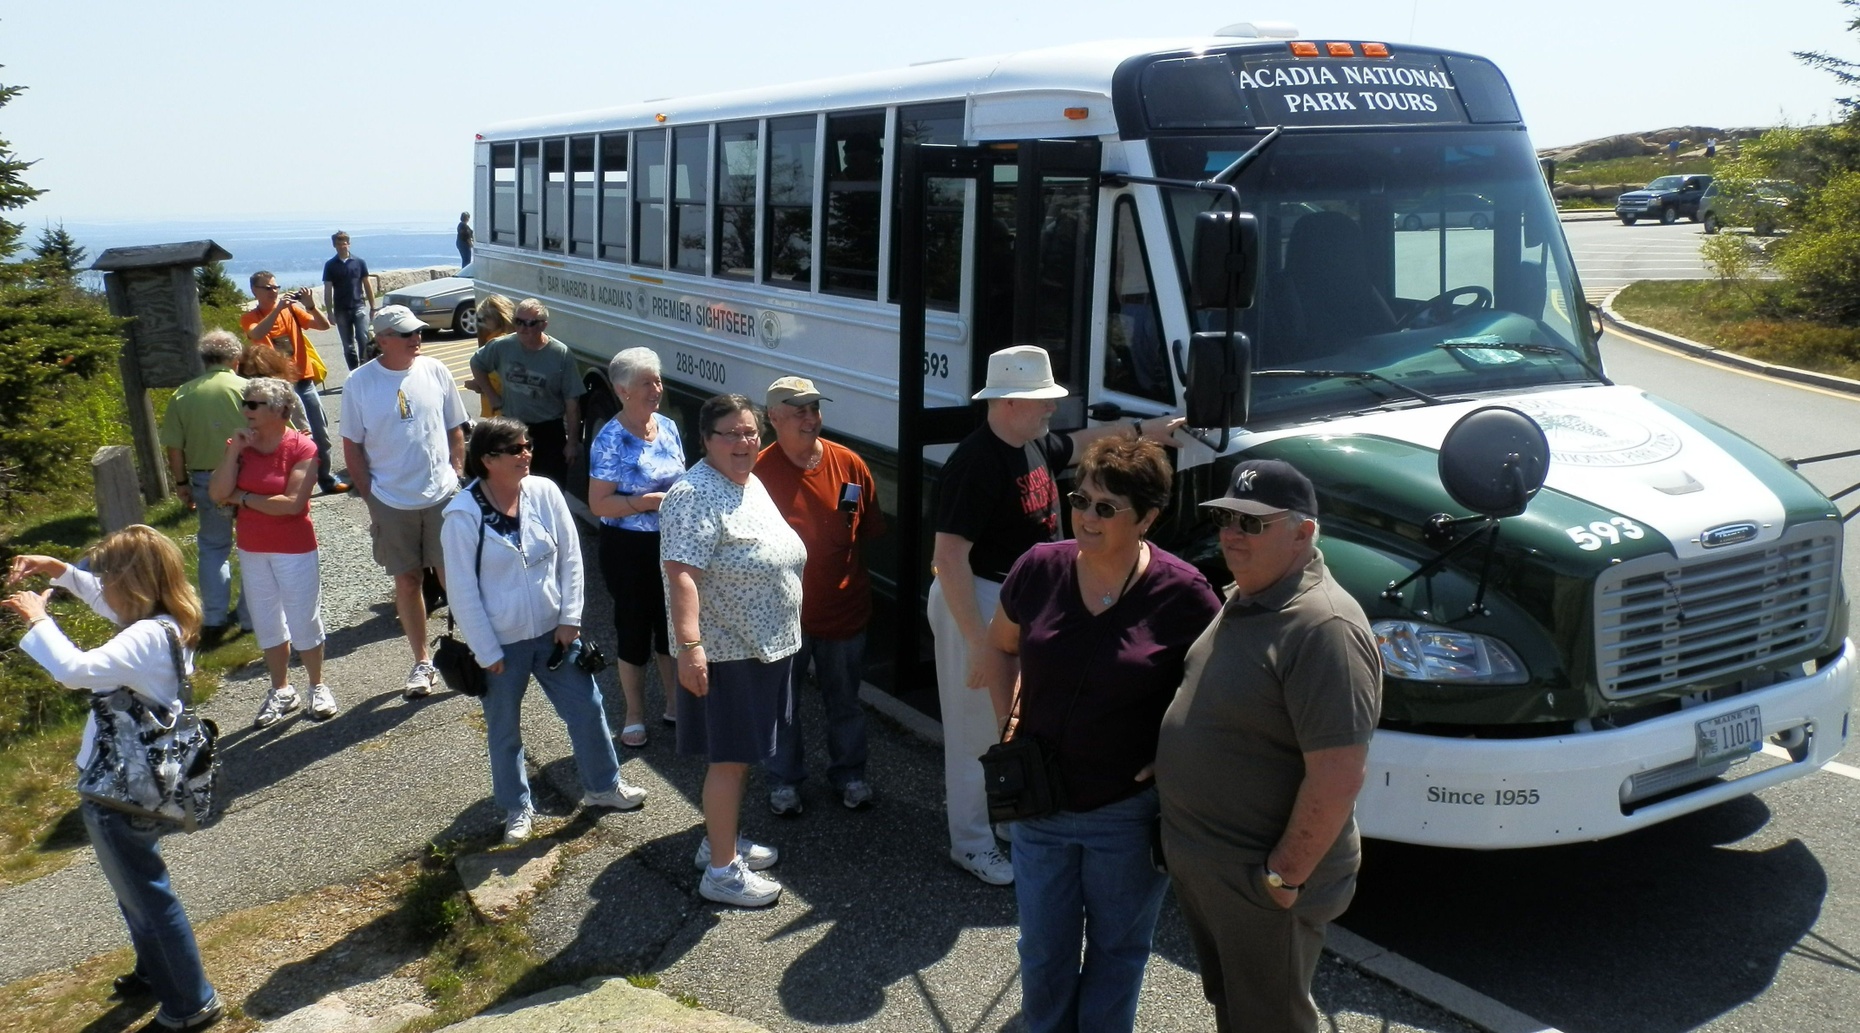 Bus Tour of Acadia National Park